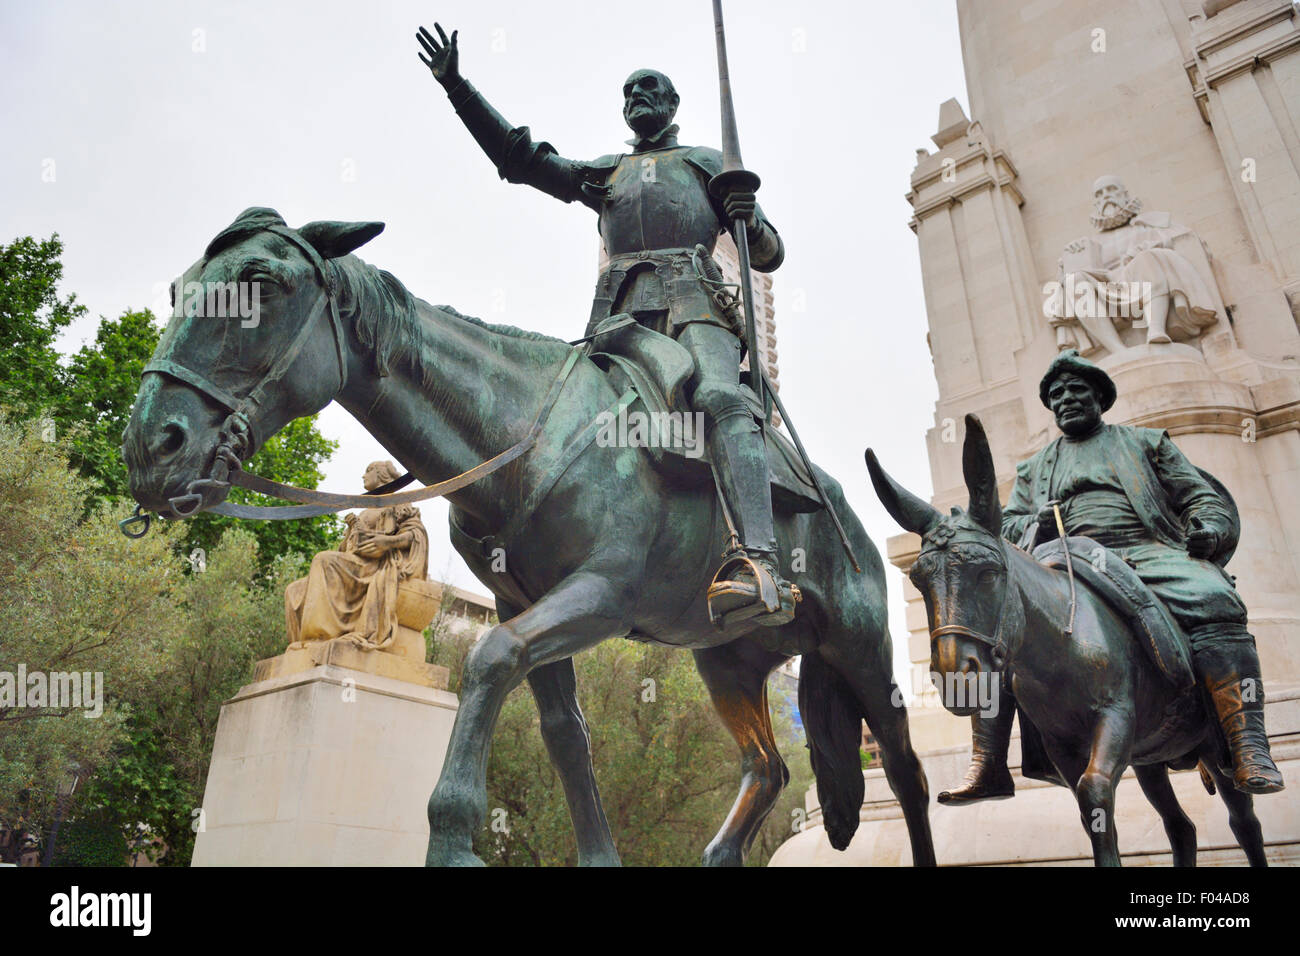 Statues of Don Quixote, knight errant, his horse 'Rocinante', Sancho Panza, in monument to author Cervantes Saavedra, Plaza de E Stock Photo